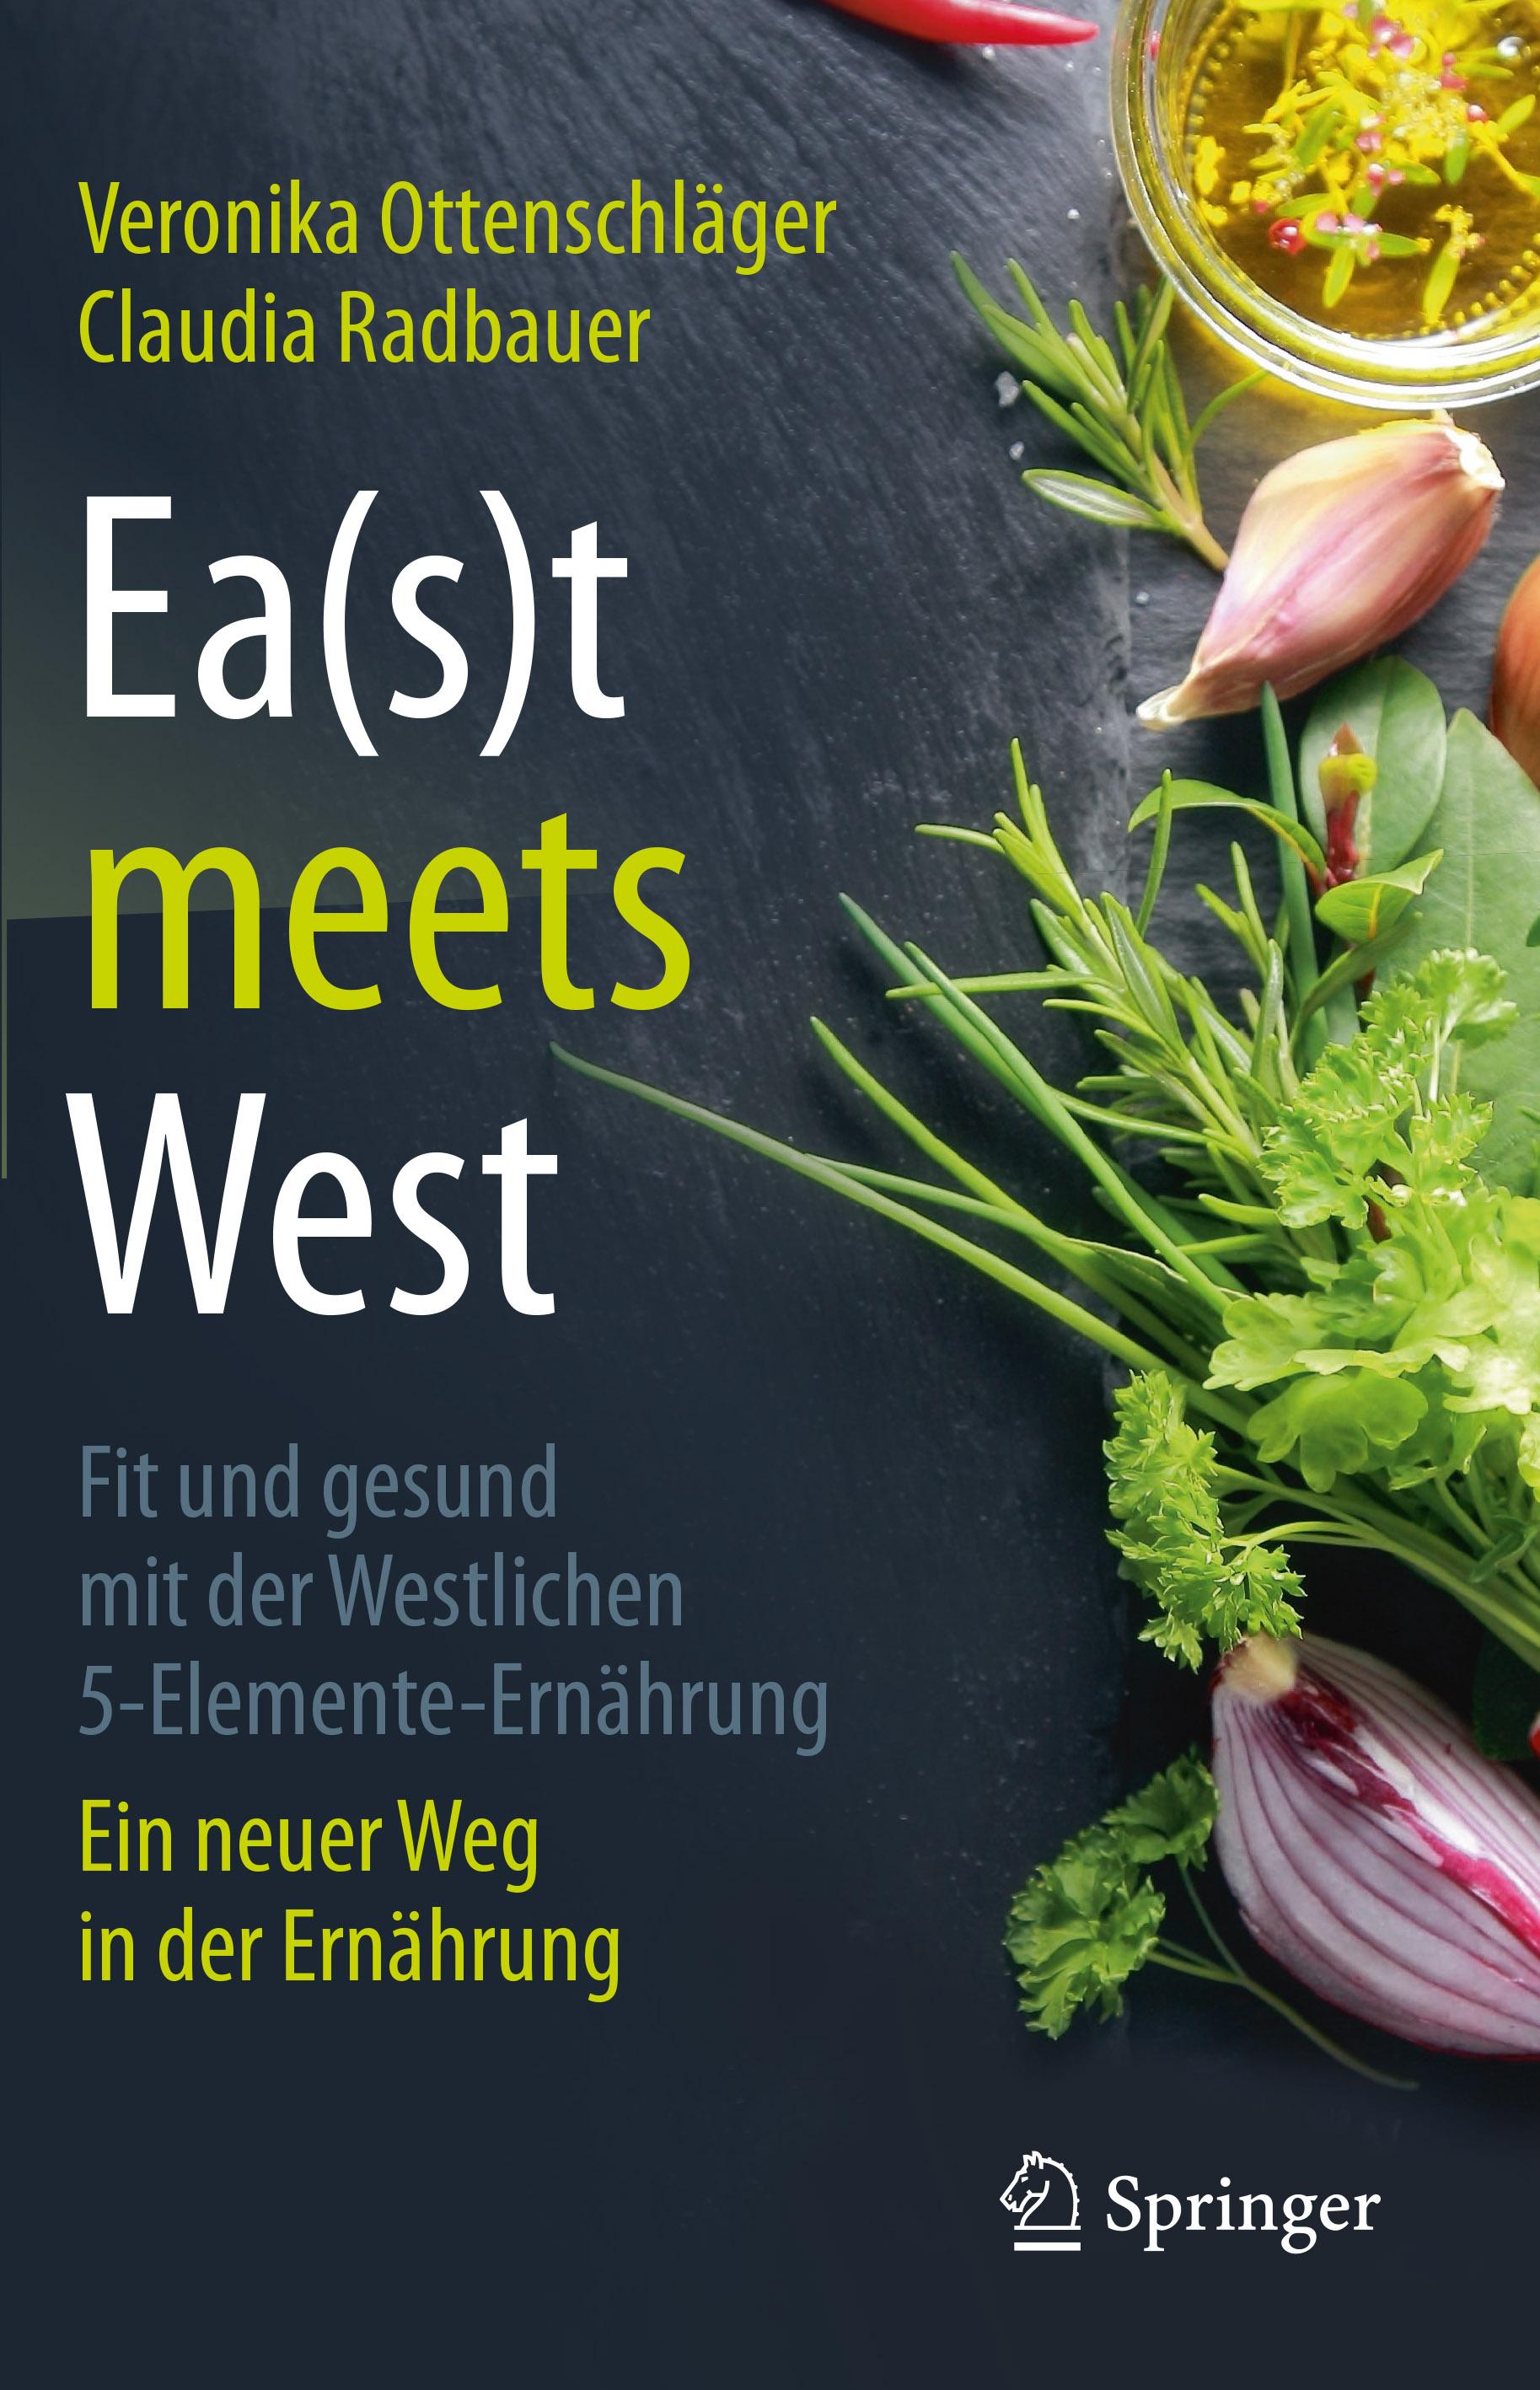 Stuwerviertler Ärztin präsentiert neues Buch „Ea(s)t meets West“